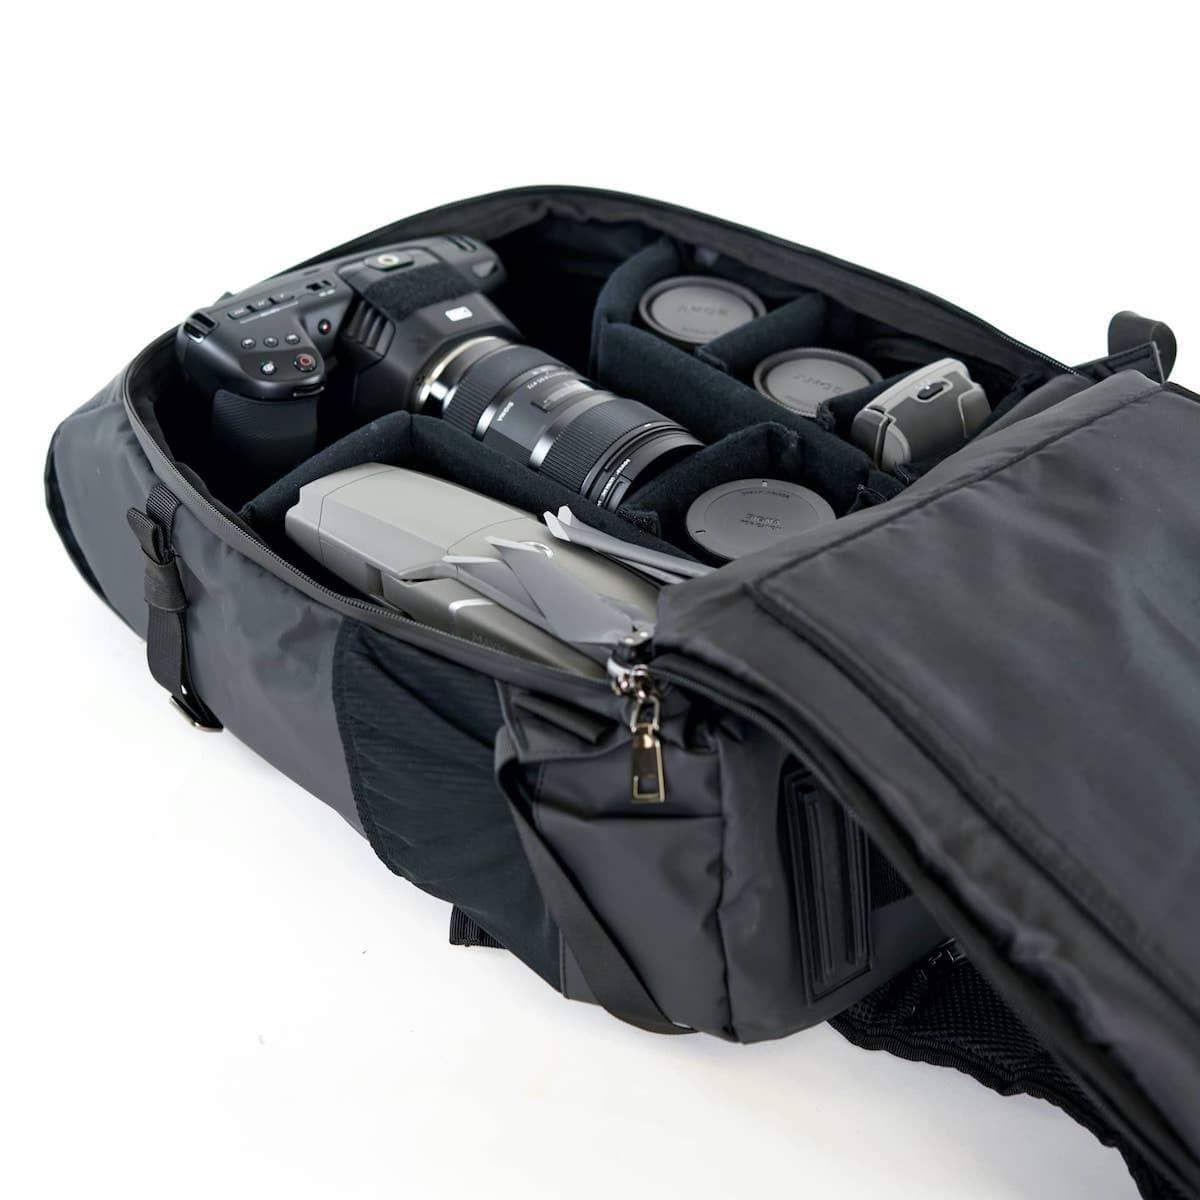 Best Carry On Backpack - Best Travel Backpack for Women - Sunny 16